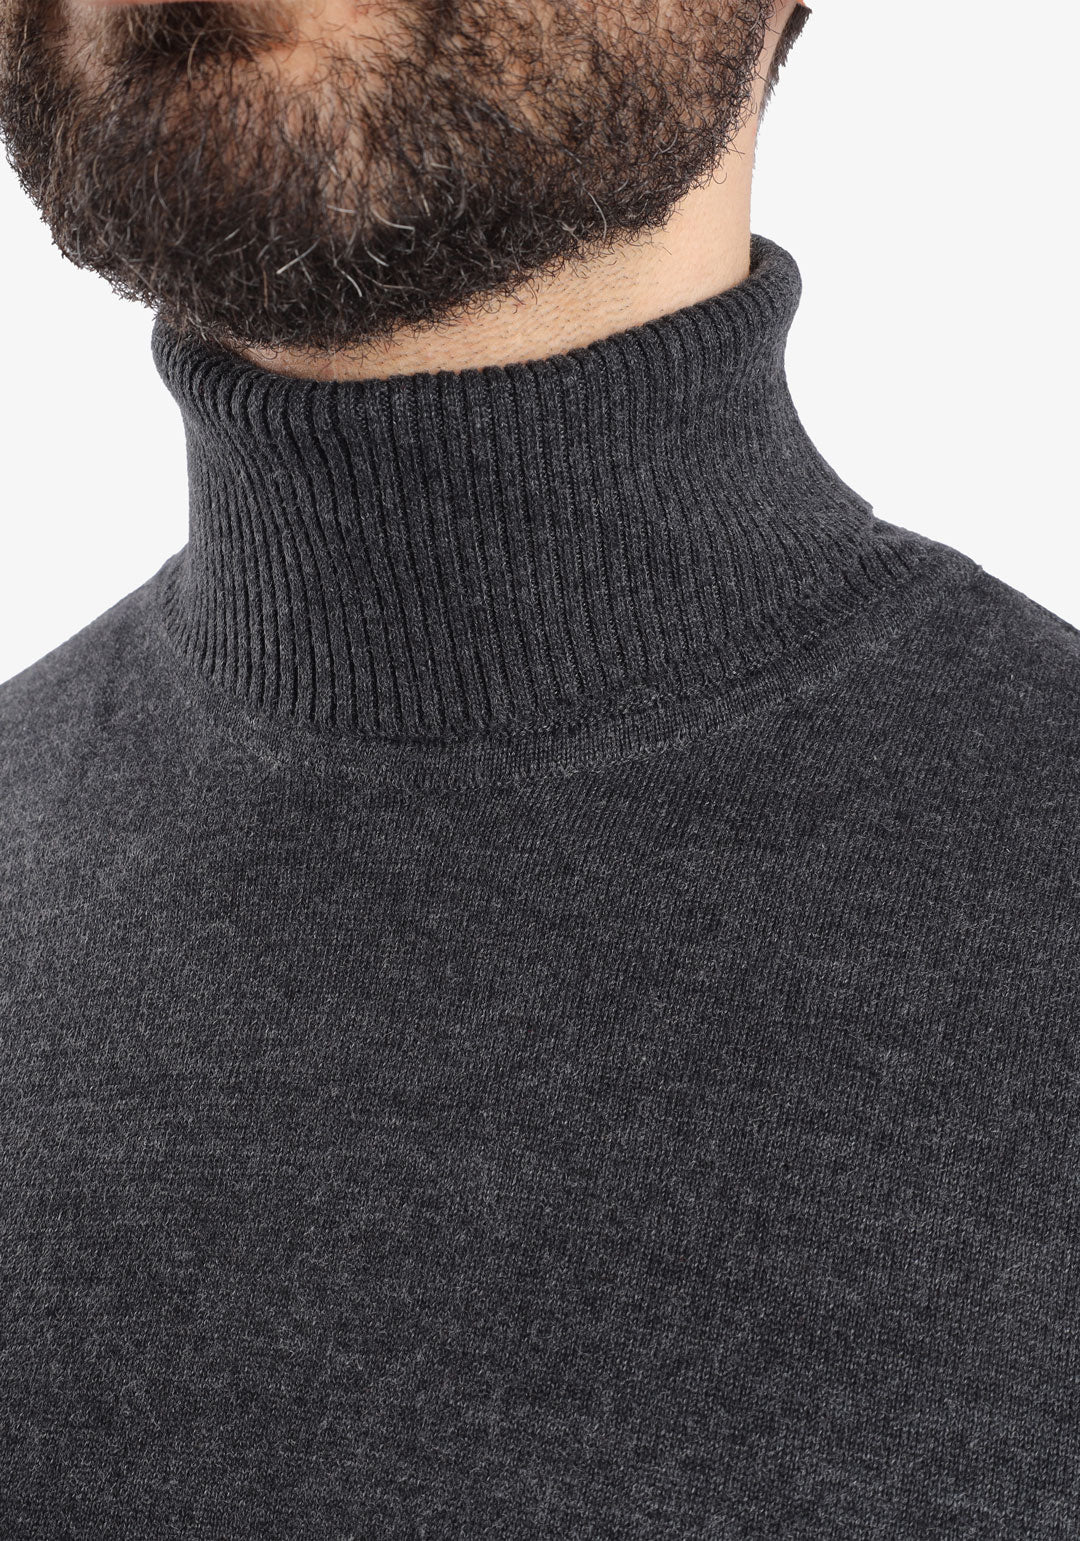 Black High Collar Cotton Basic Plain Pullover